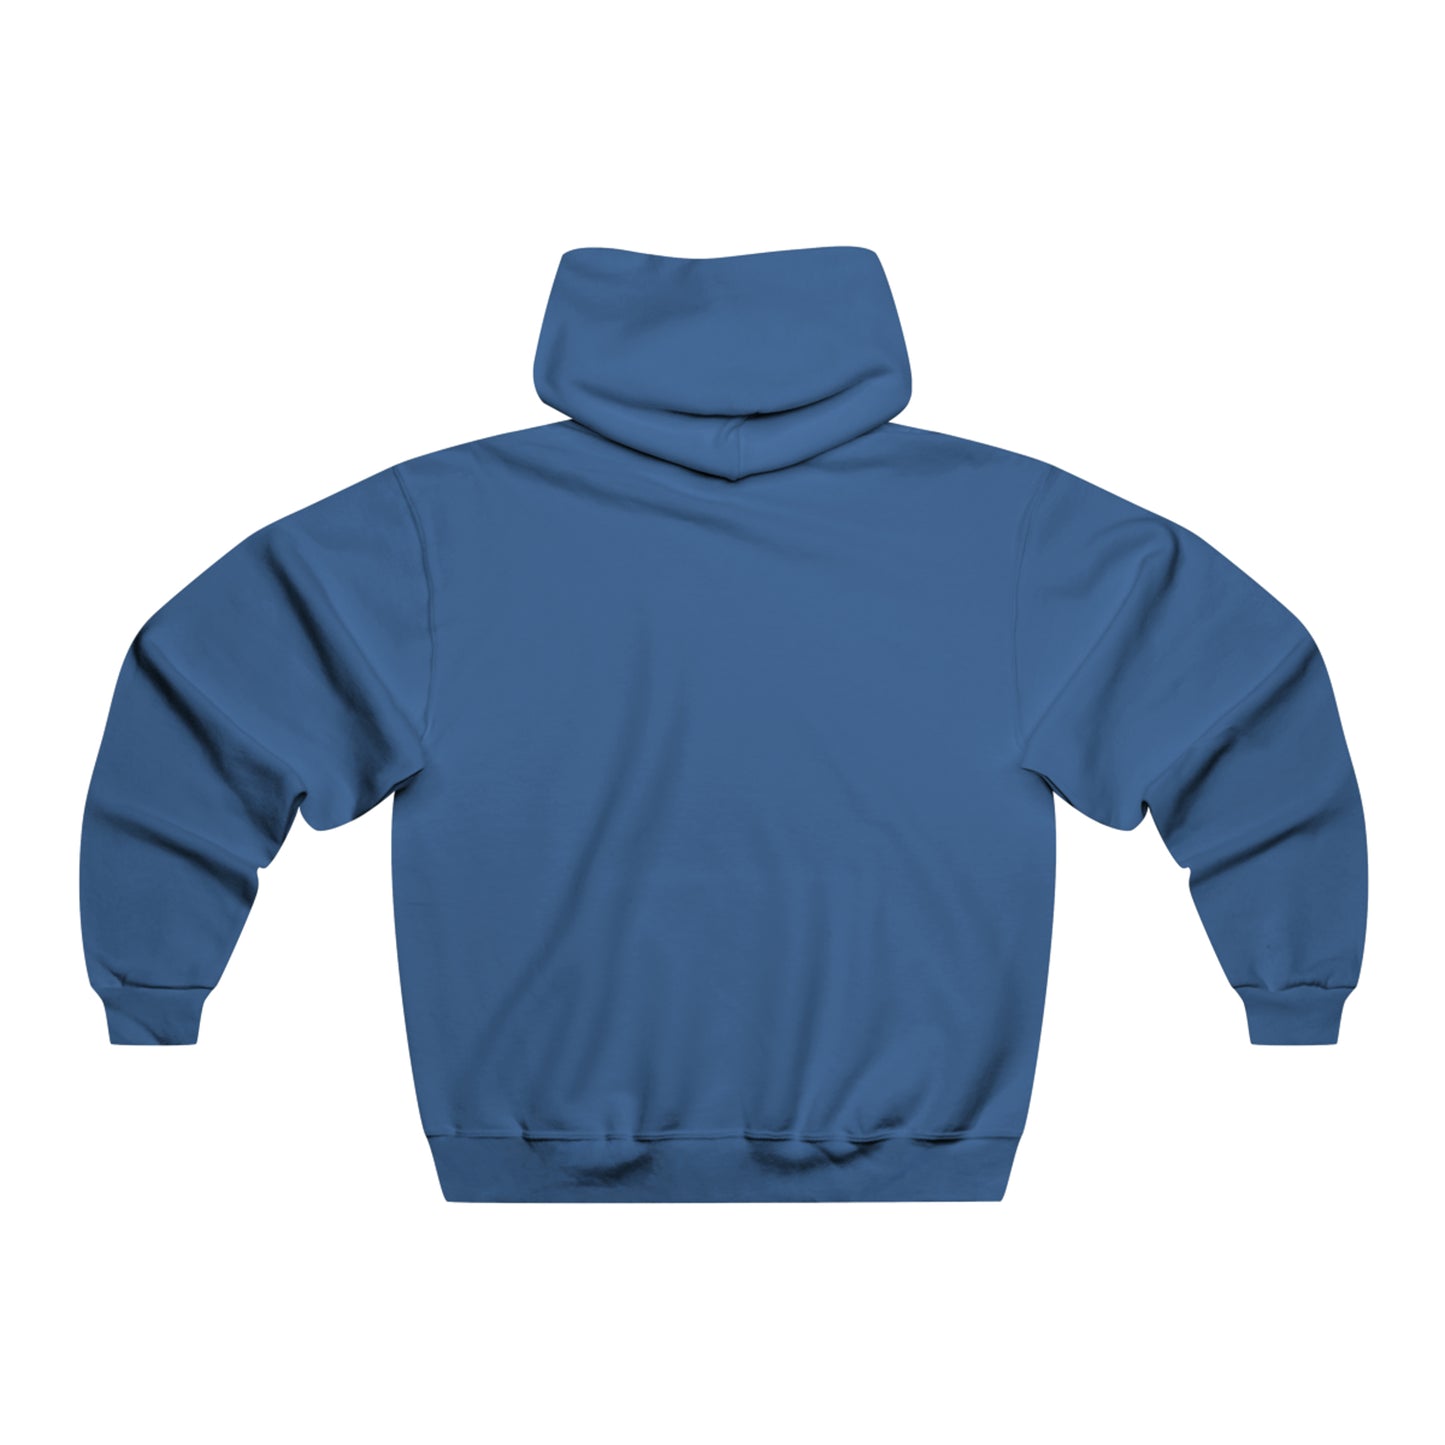 Topspin Tennis Hooded Sweatshirt